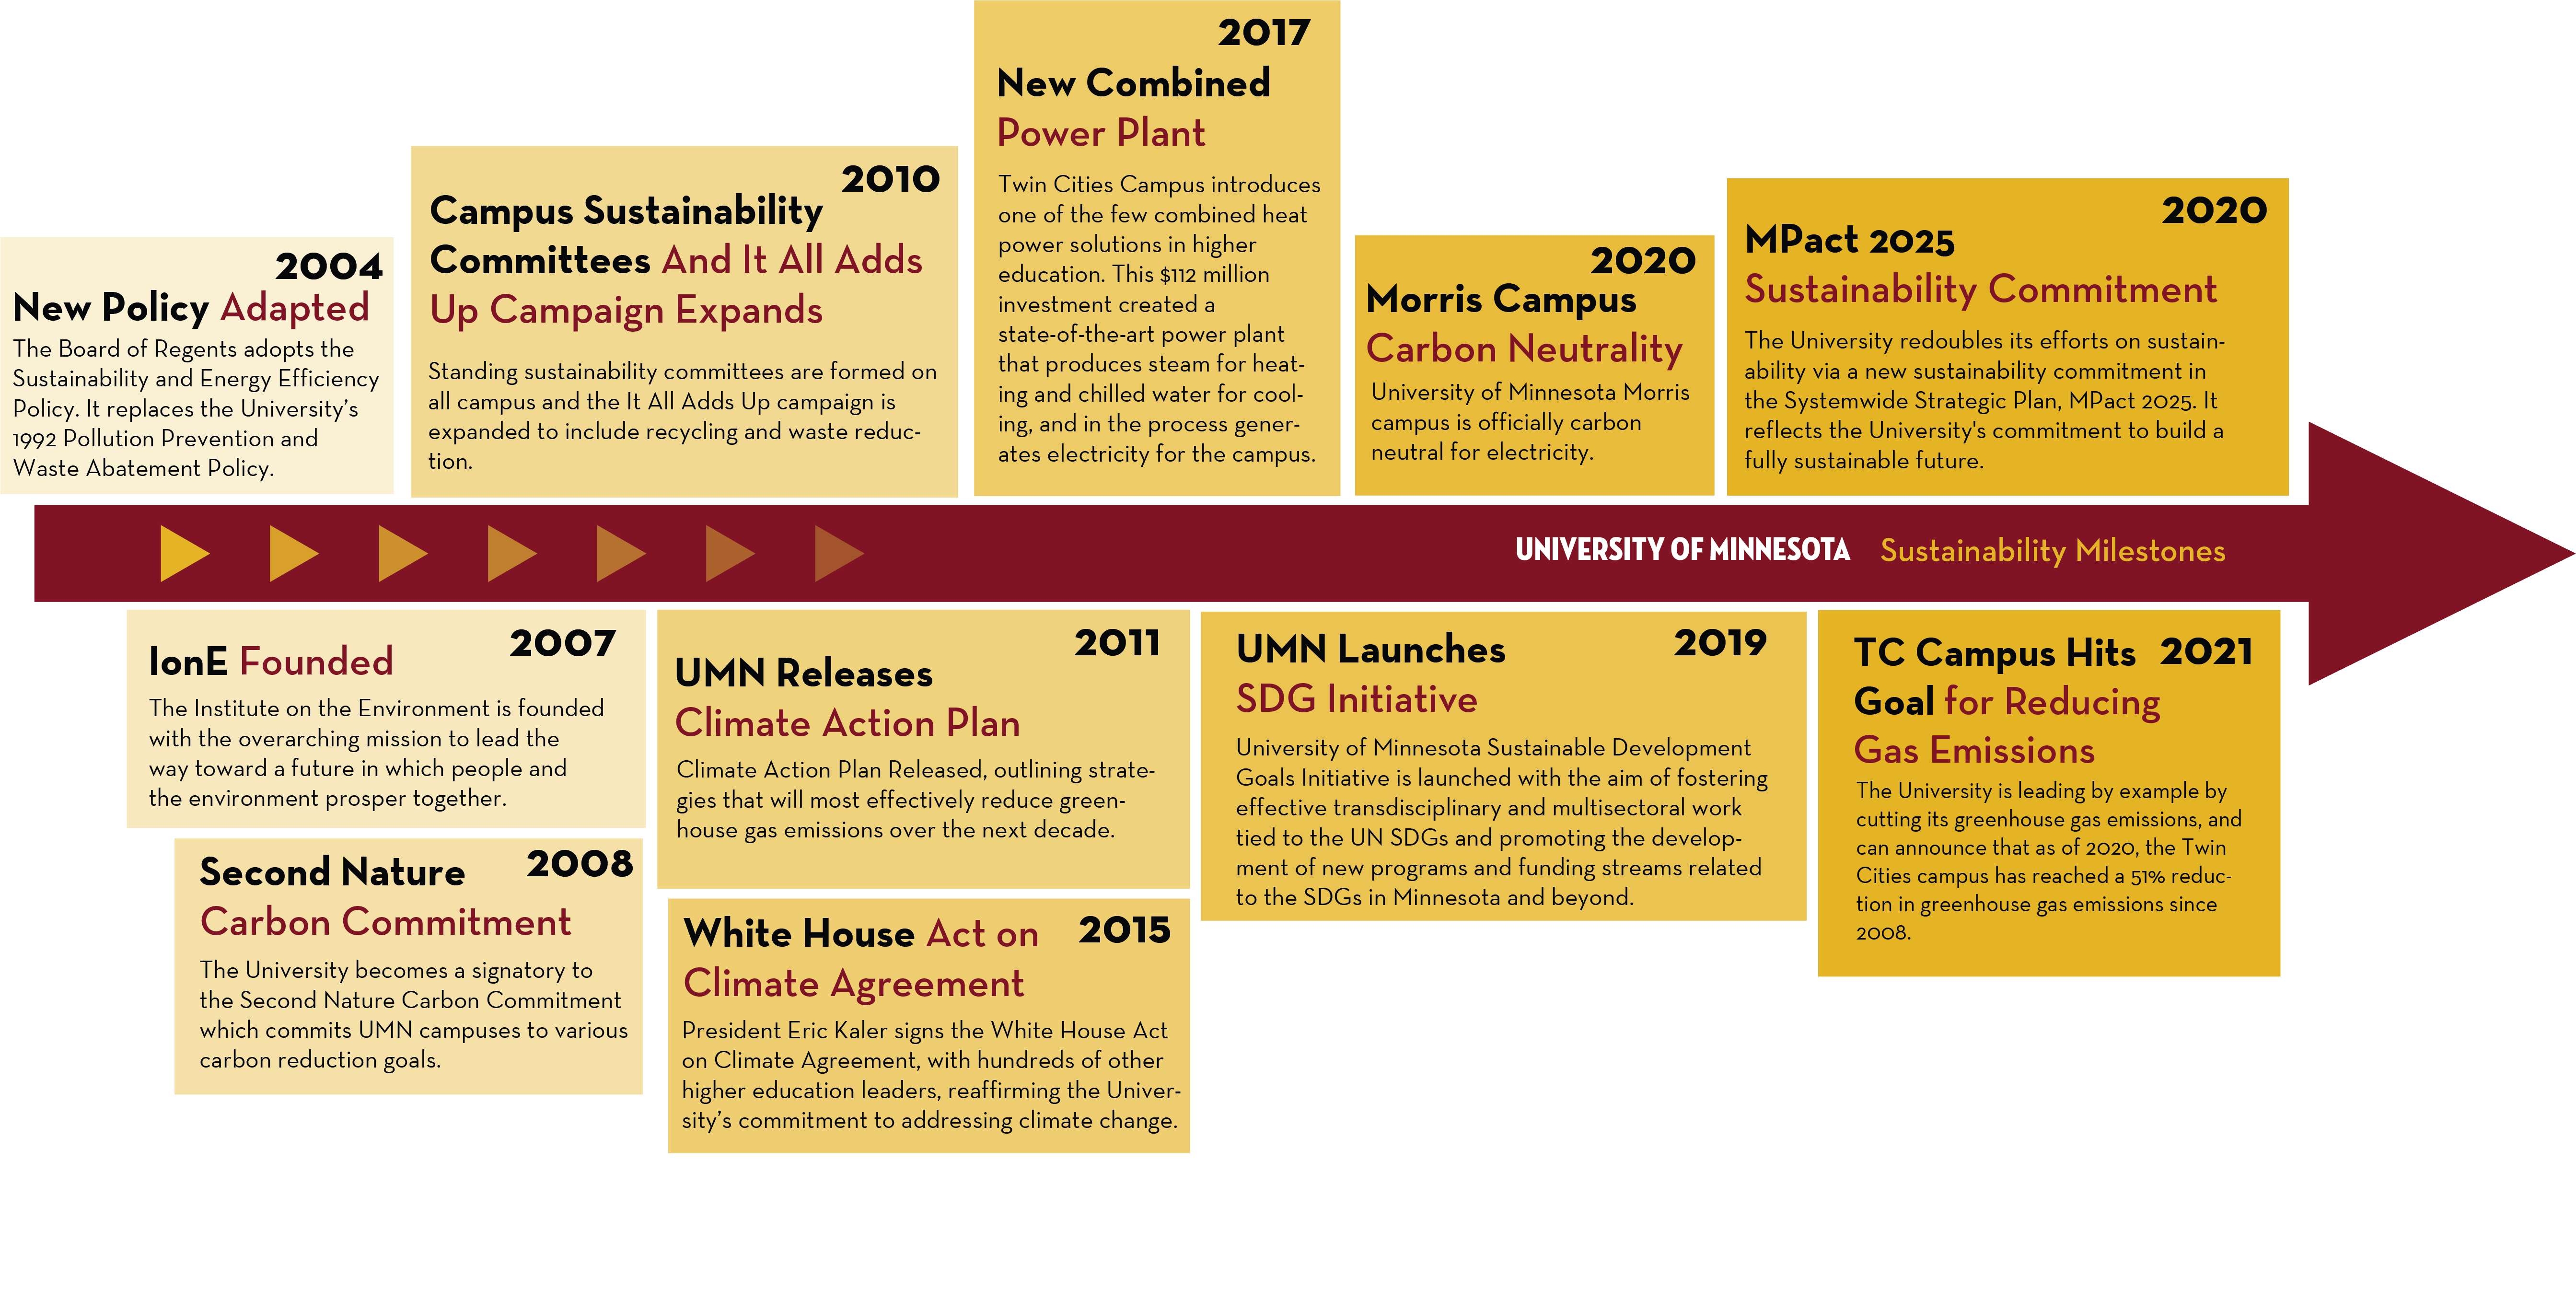 Timeline showing key UMN sustainability milestones over the last 20 years. 